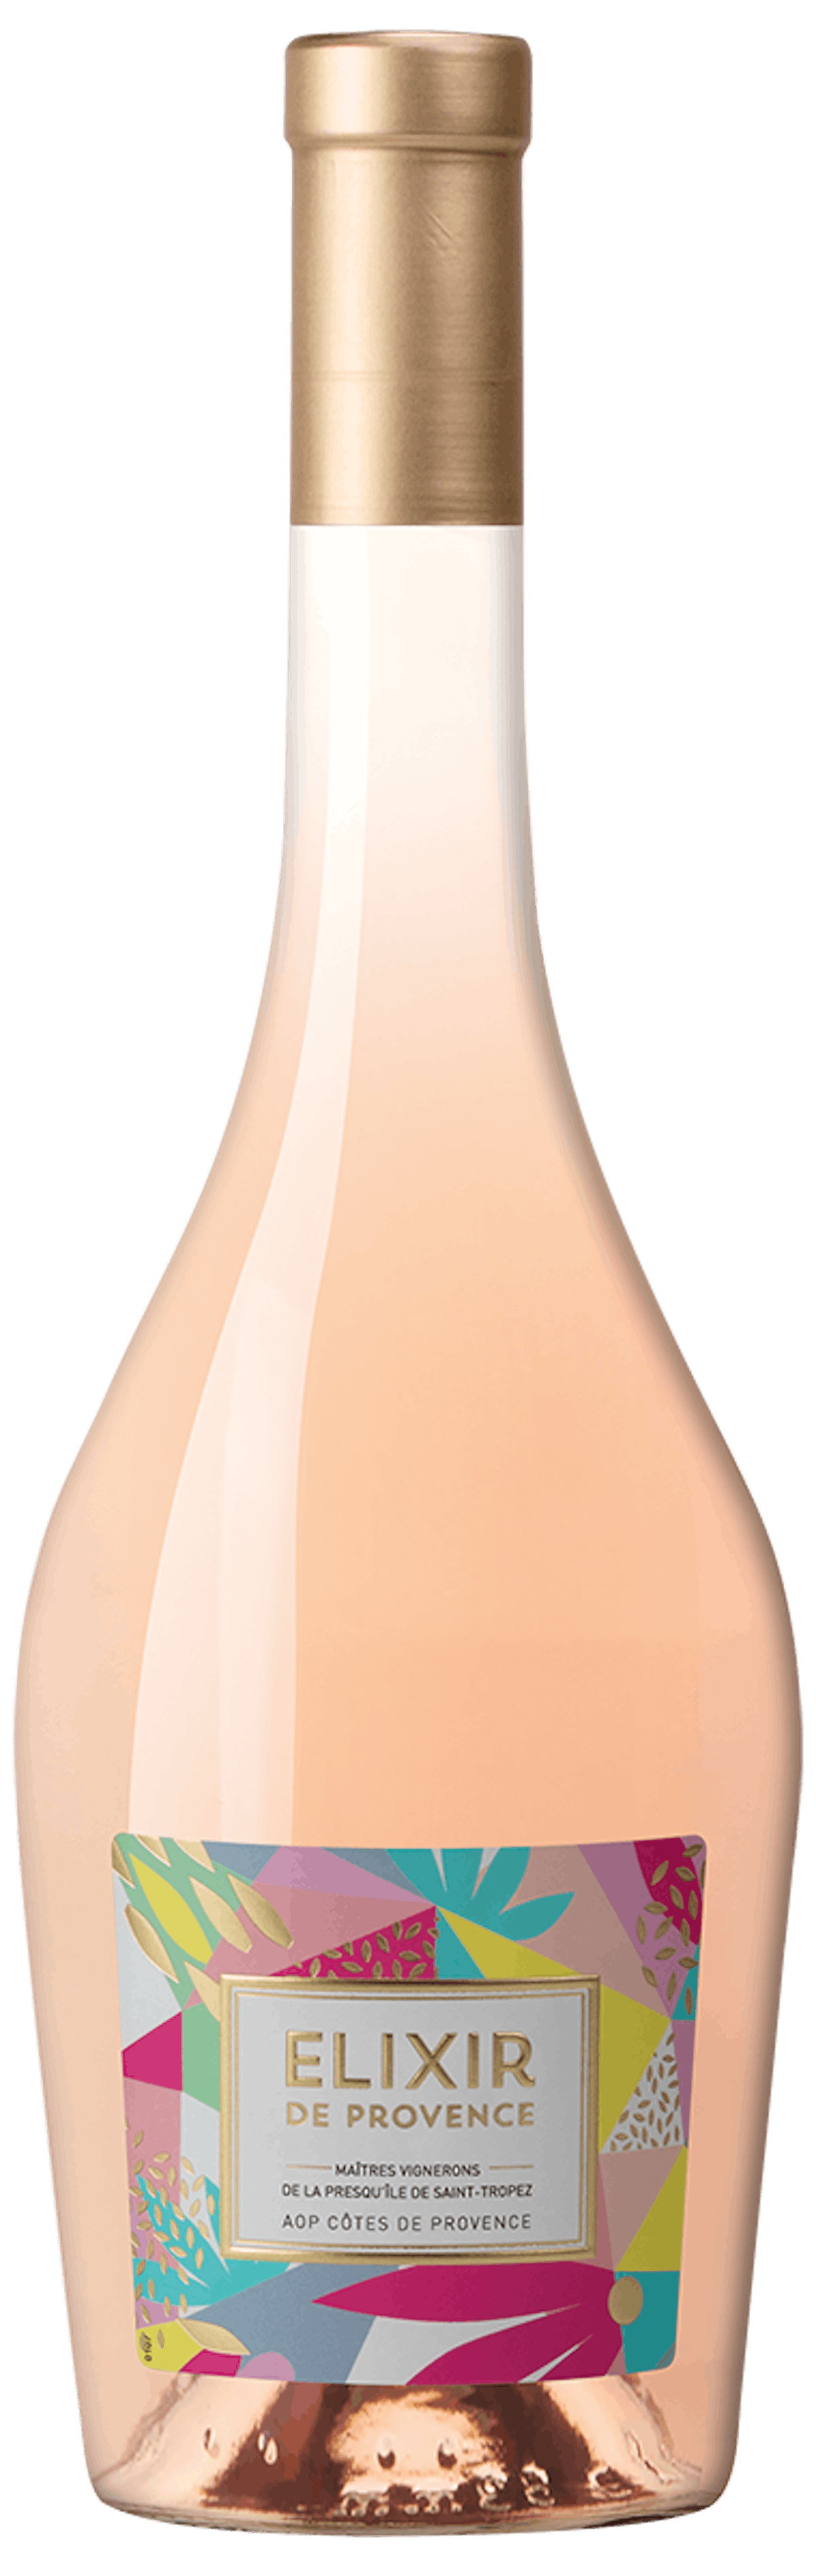 Elixir Côtes de Provence